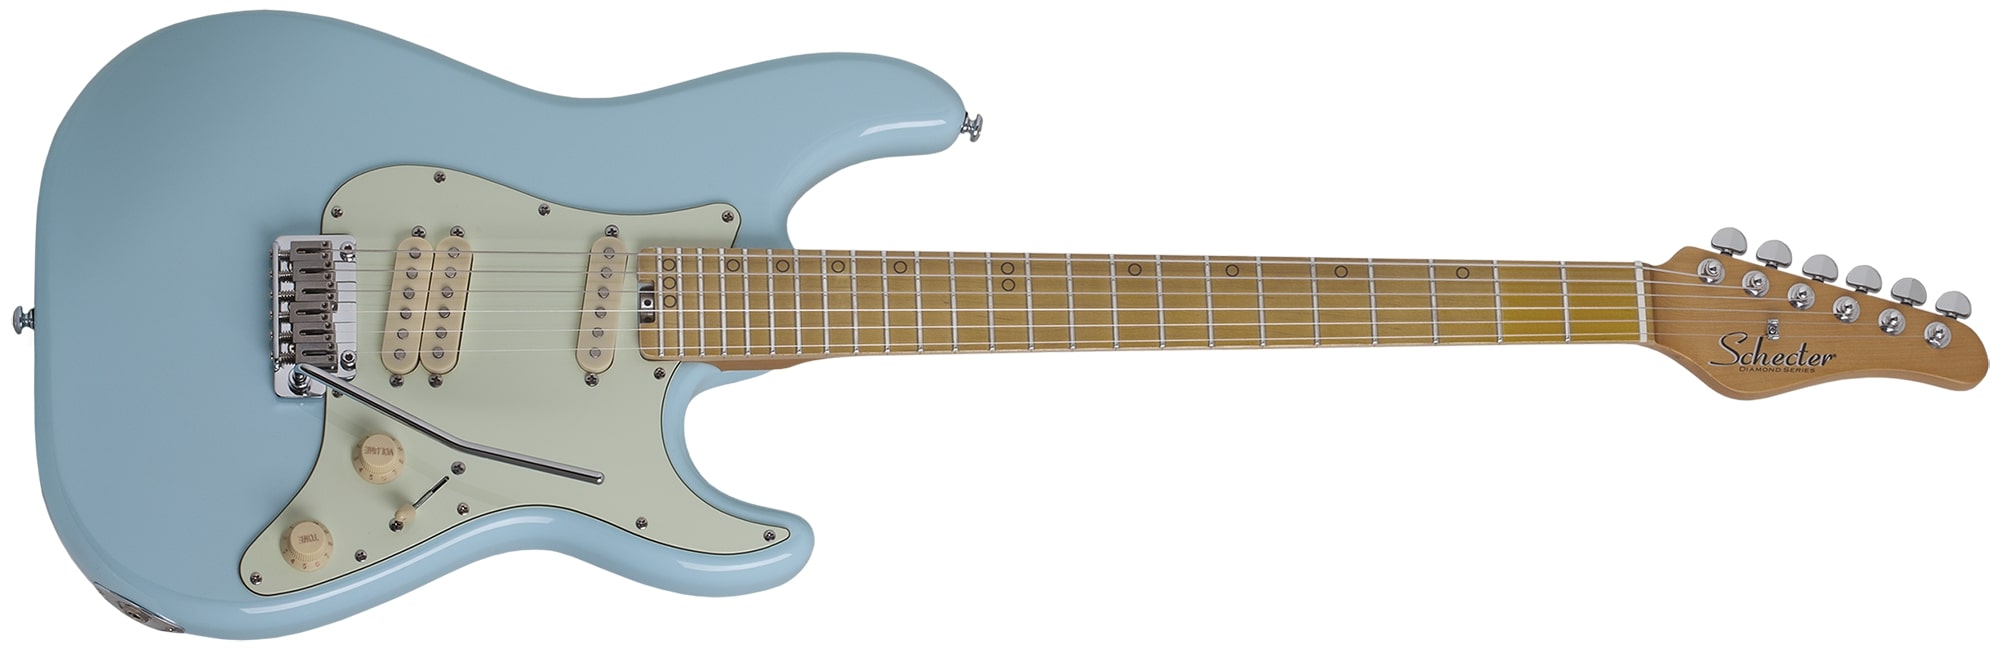 Schecter MV-6 Electric Guitar, Super Sonic Blue 4203-SHC